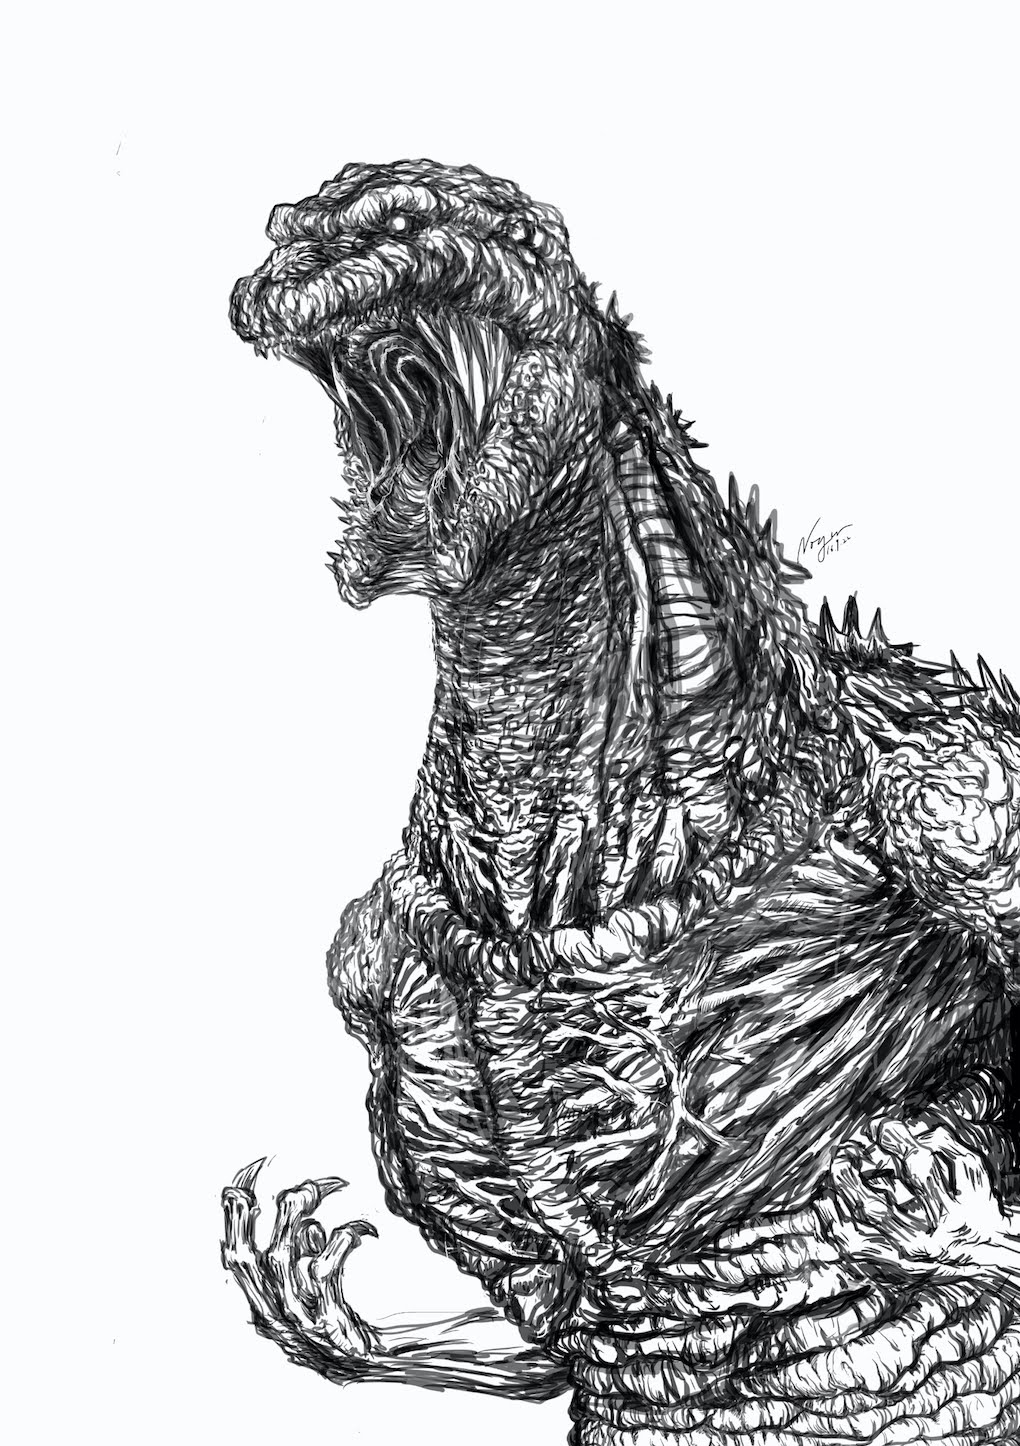 Godzilla Drawing at Explore collection of Godzilla